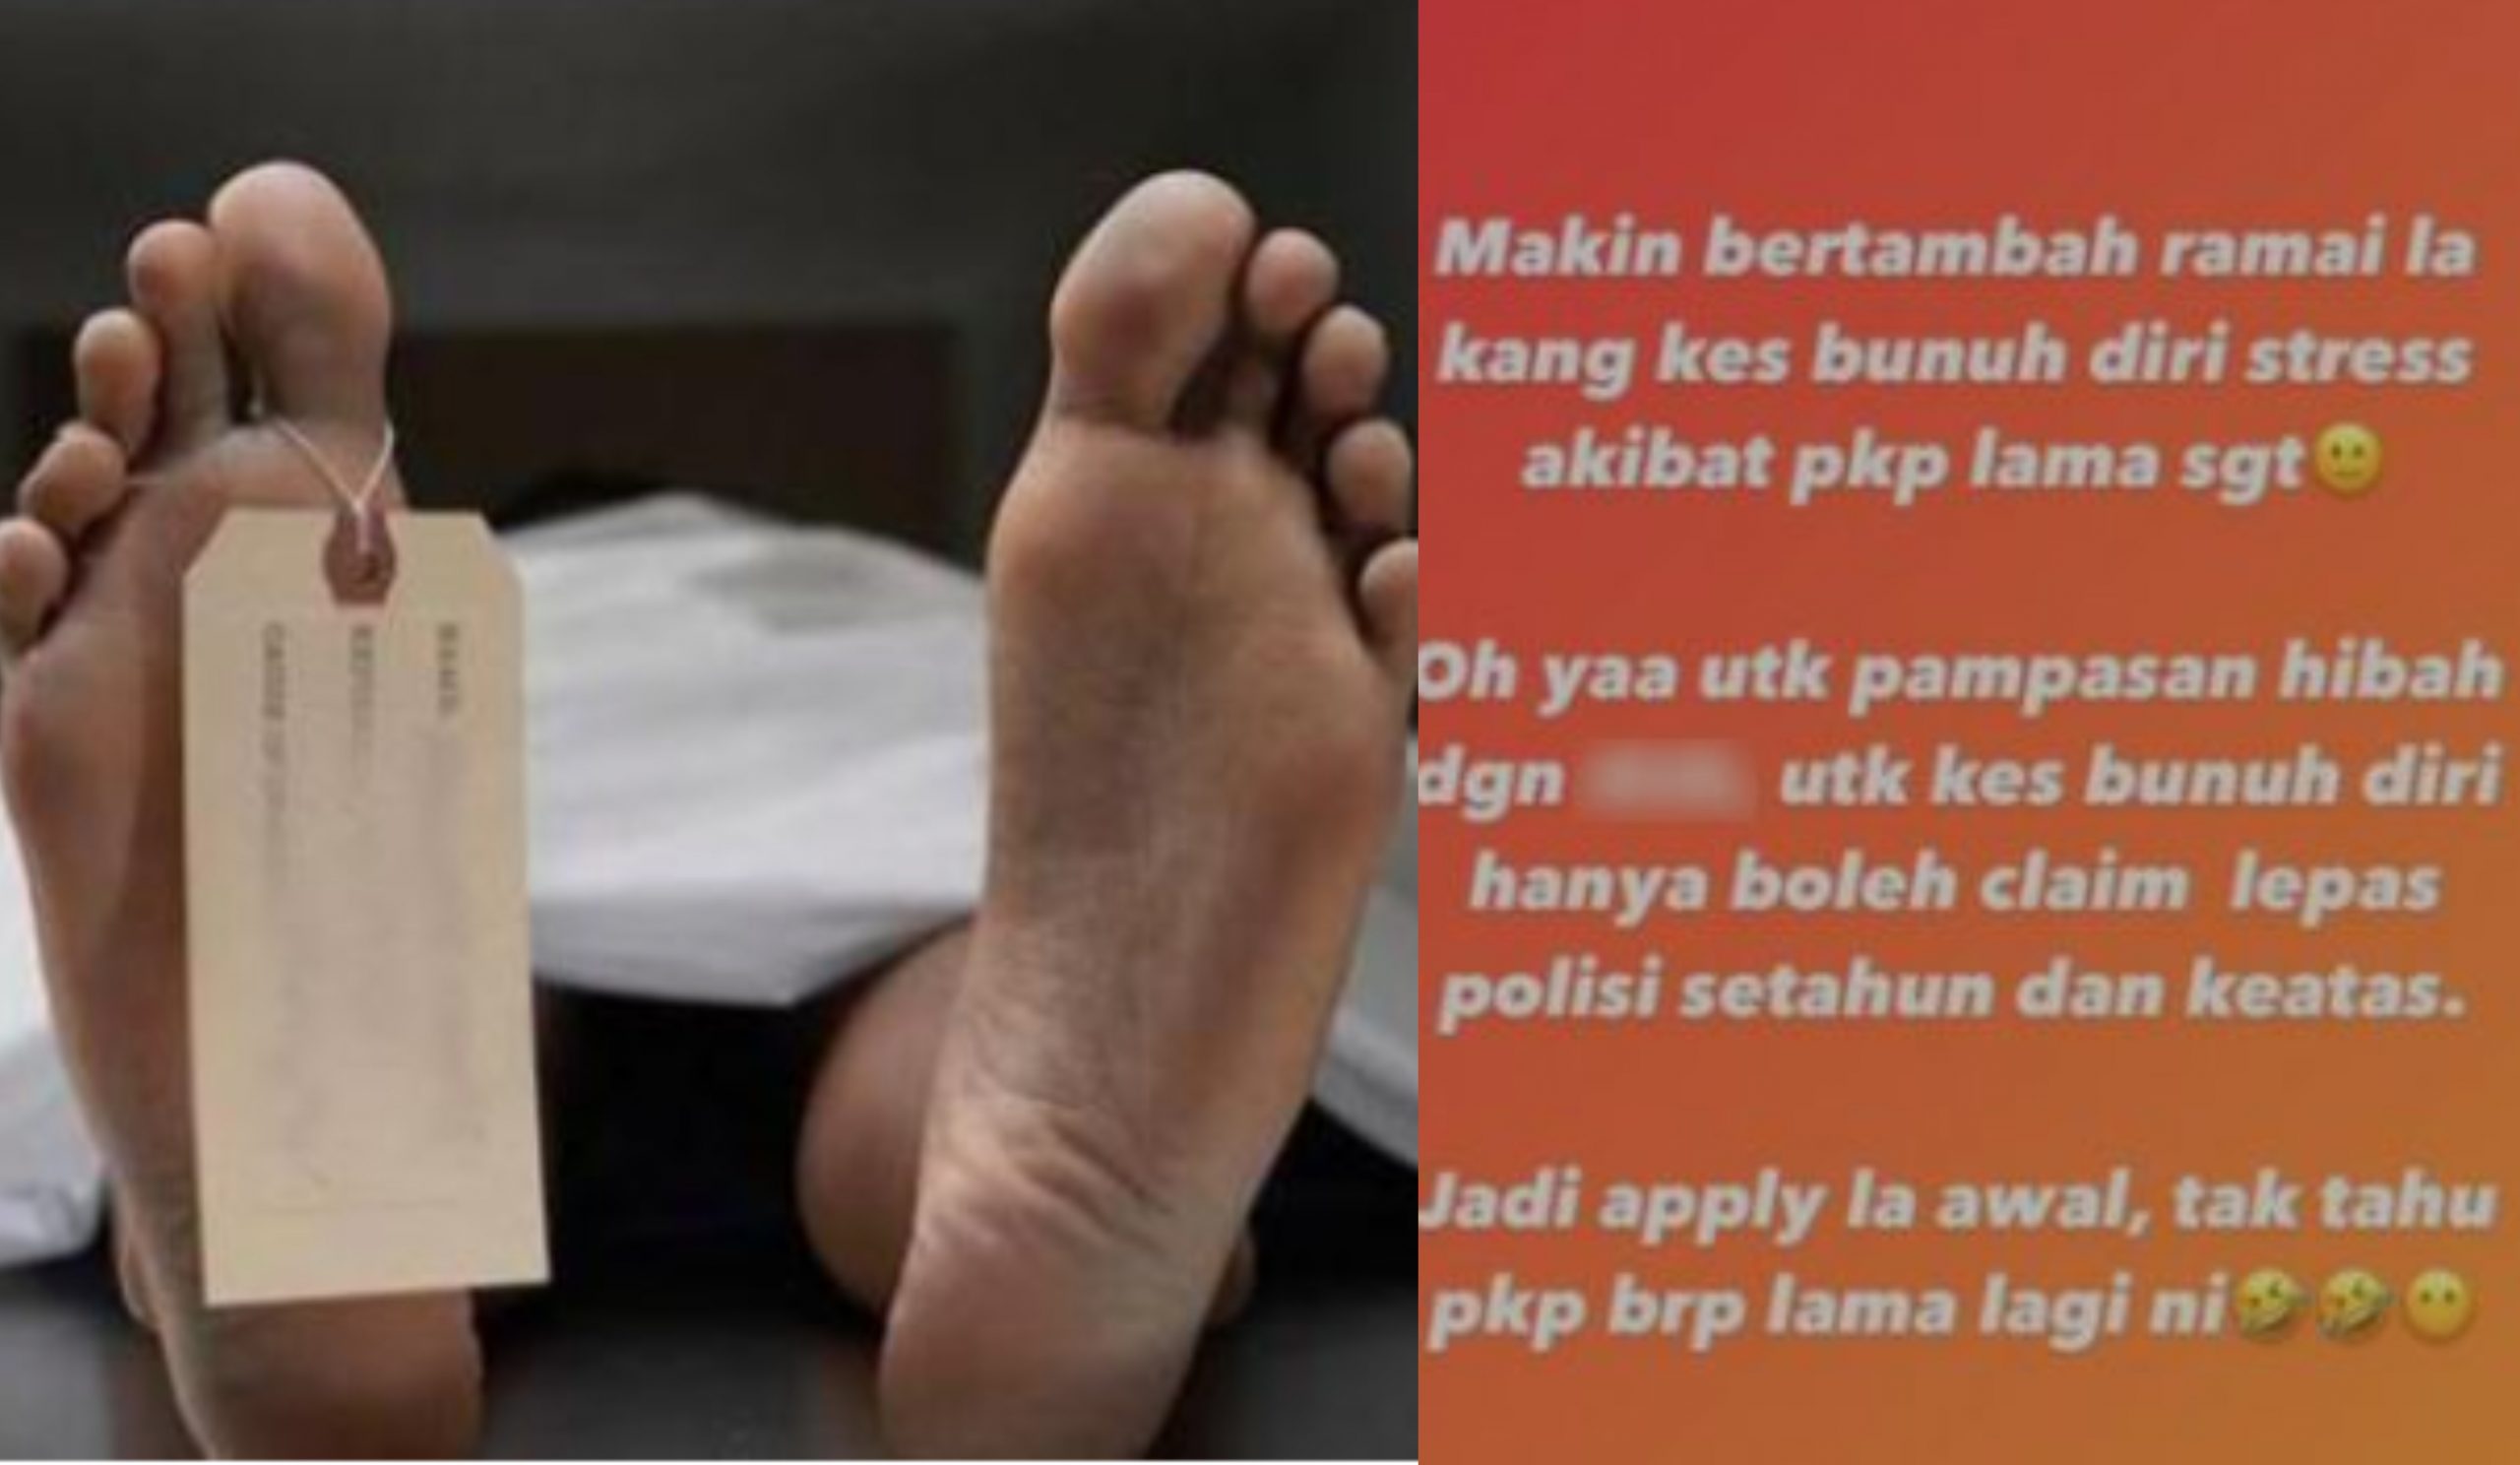 Kes bunuh diri di malaysia 2021